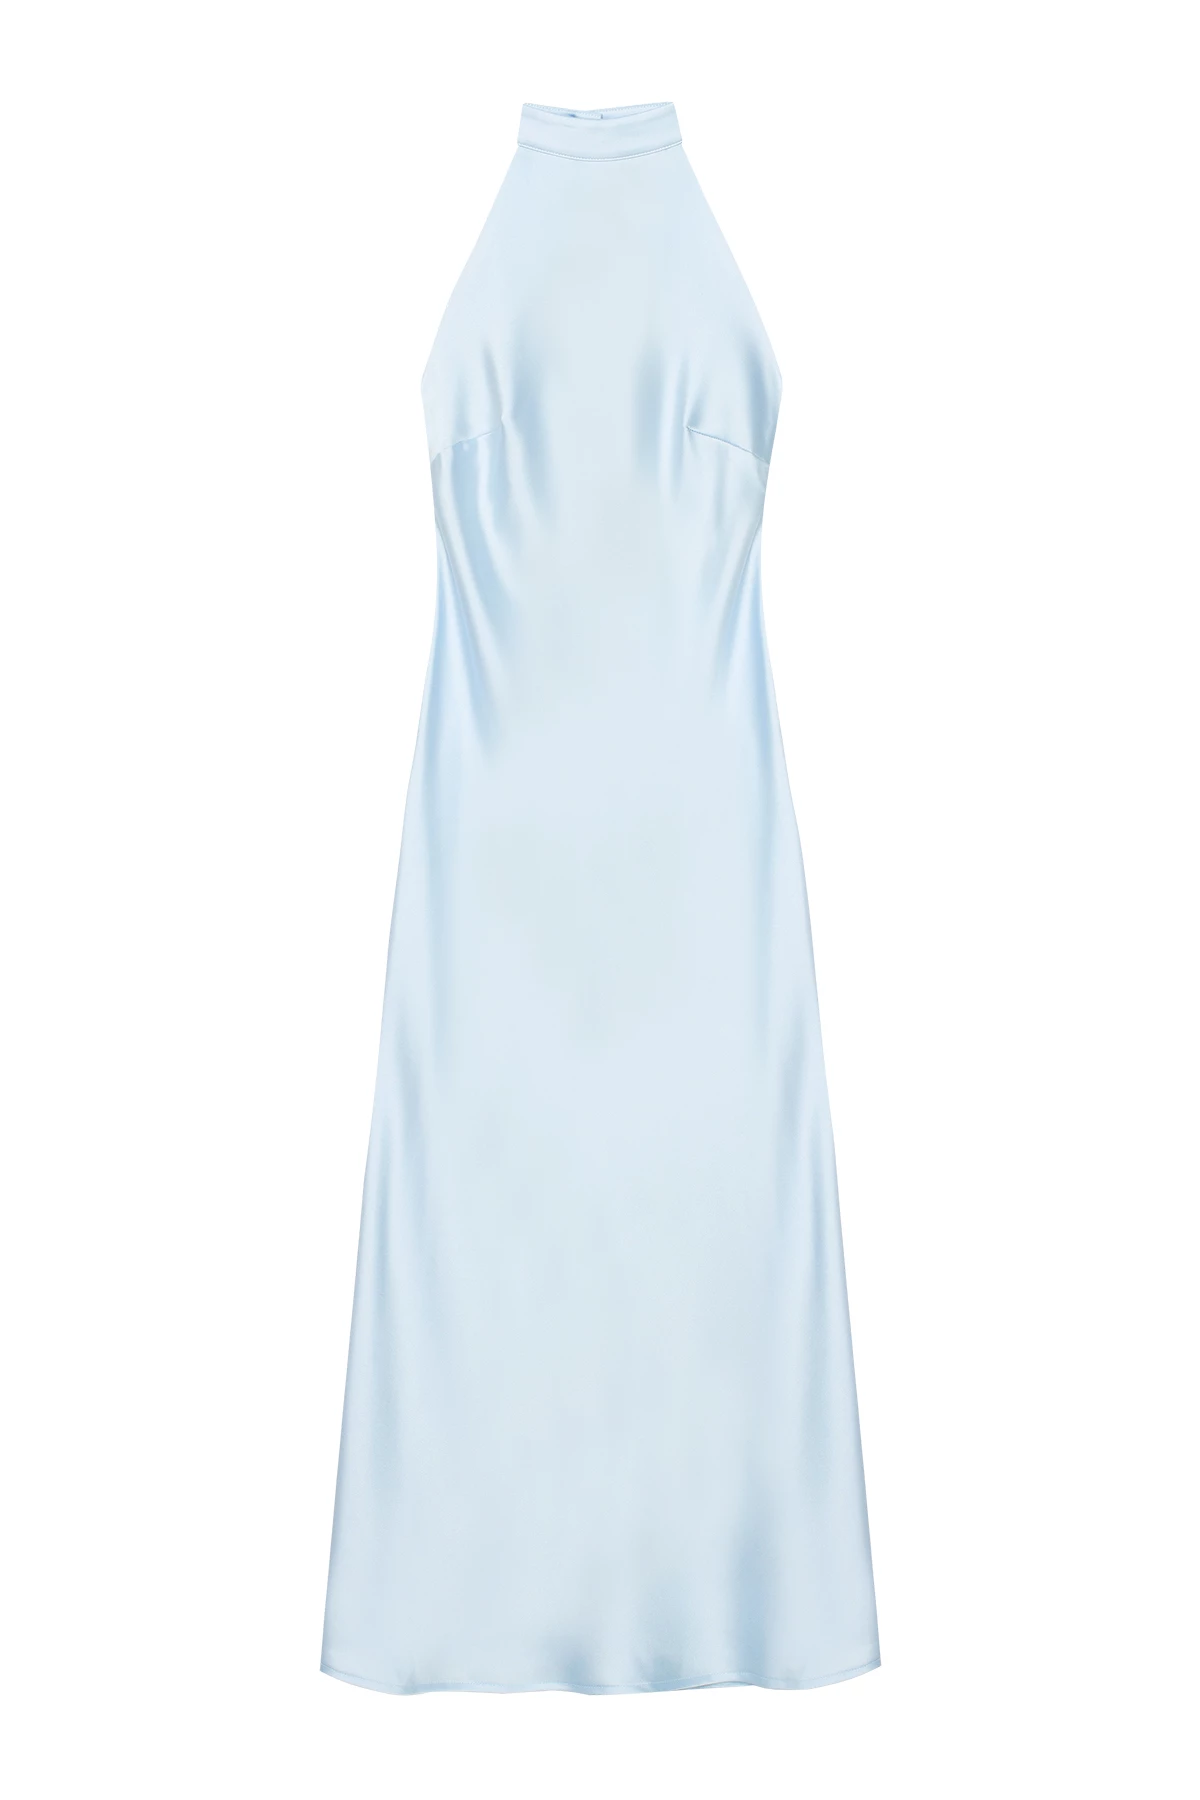 Blue satin midi dress with a high collar, photo 5